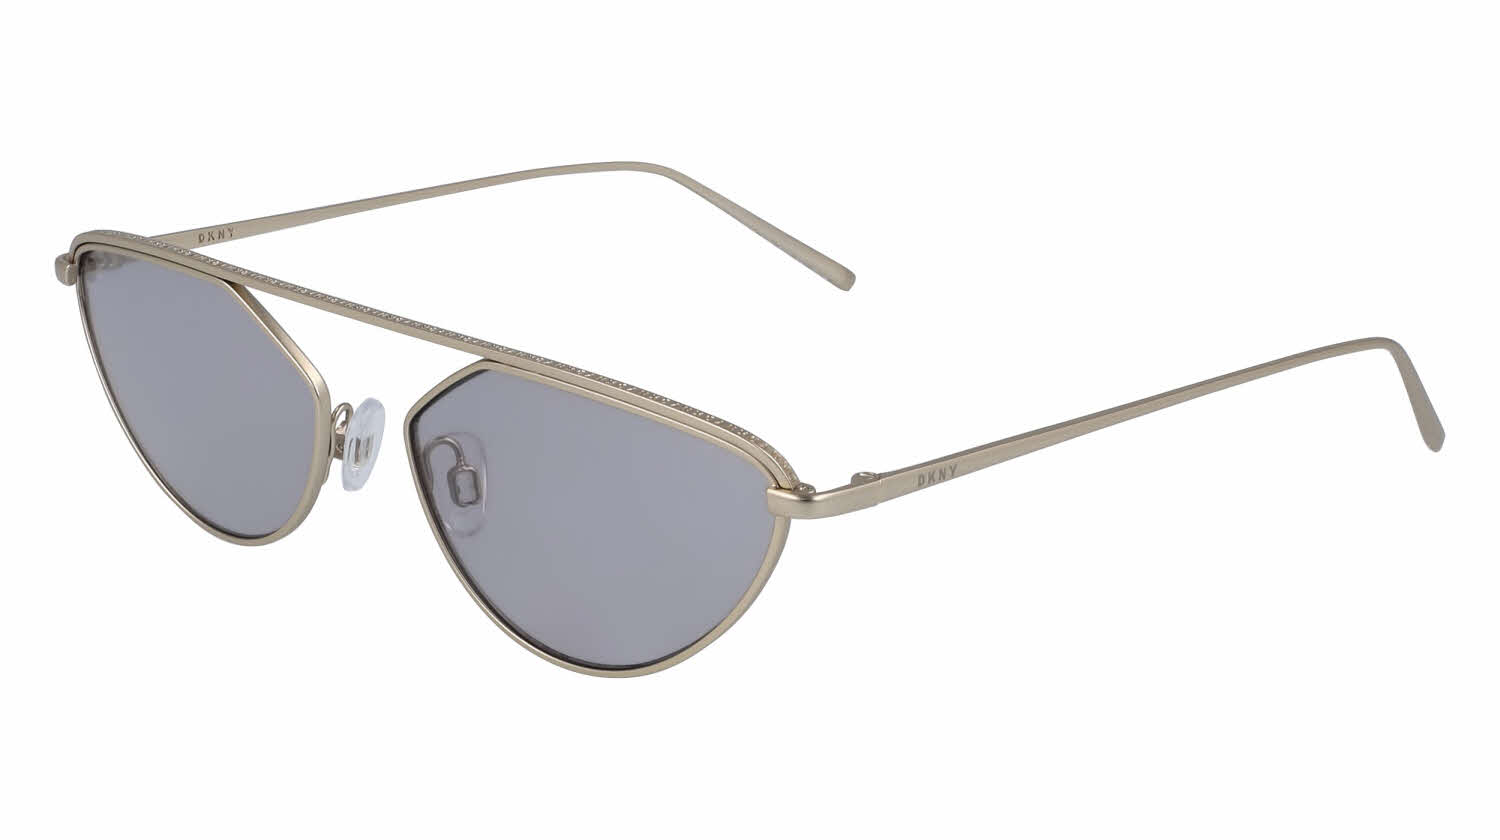 DKNY DK109S Sunglasses | Free Shipping